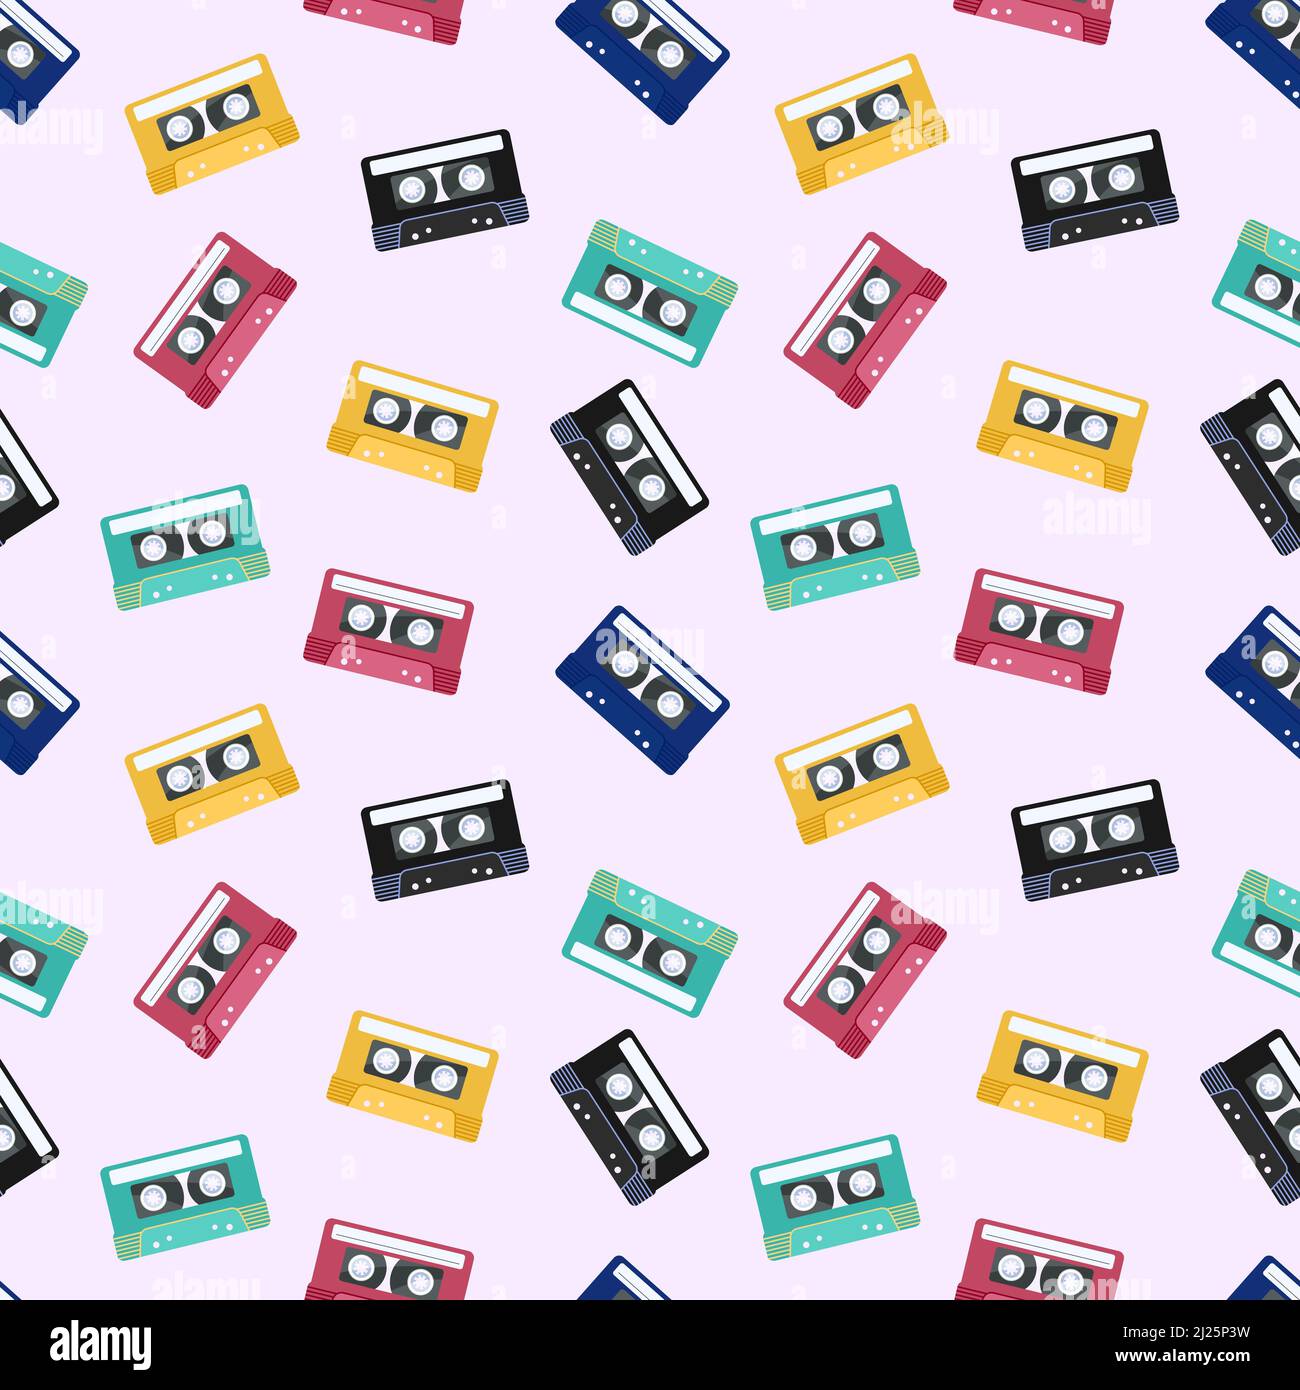 90s Musikmuster. Retro farbenfrohe nahtlose Hintergrund mit Audio-Kassetten. Audiokassetten isoliert. Vektor flache Illustration für Designs, Hintergrund, Text Stock Vektor